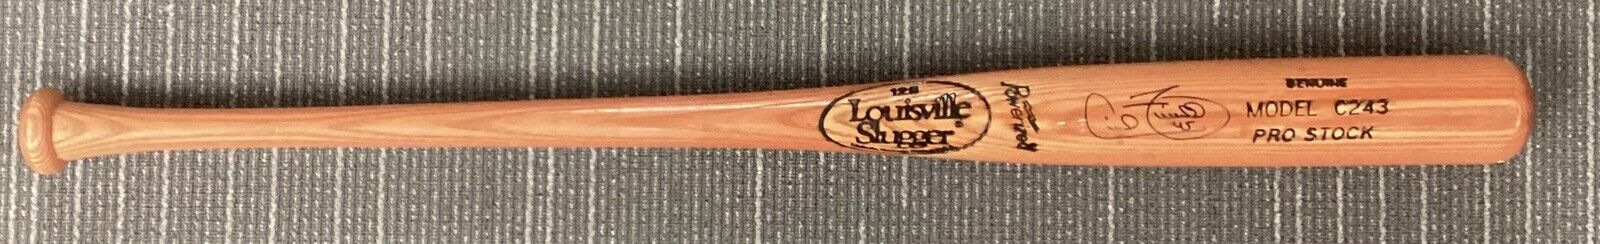 Cecil Fielder Signed Baseball Bat Louisville Slugger Tigers Autograph PSA/DNA